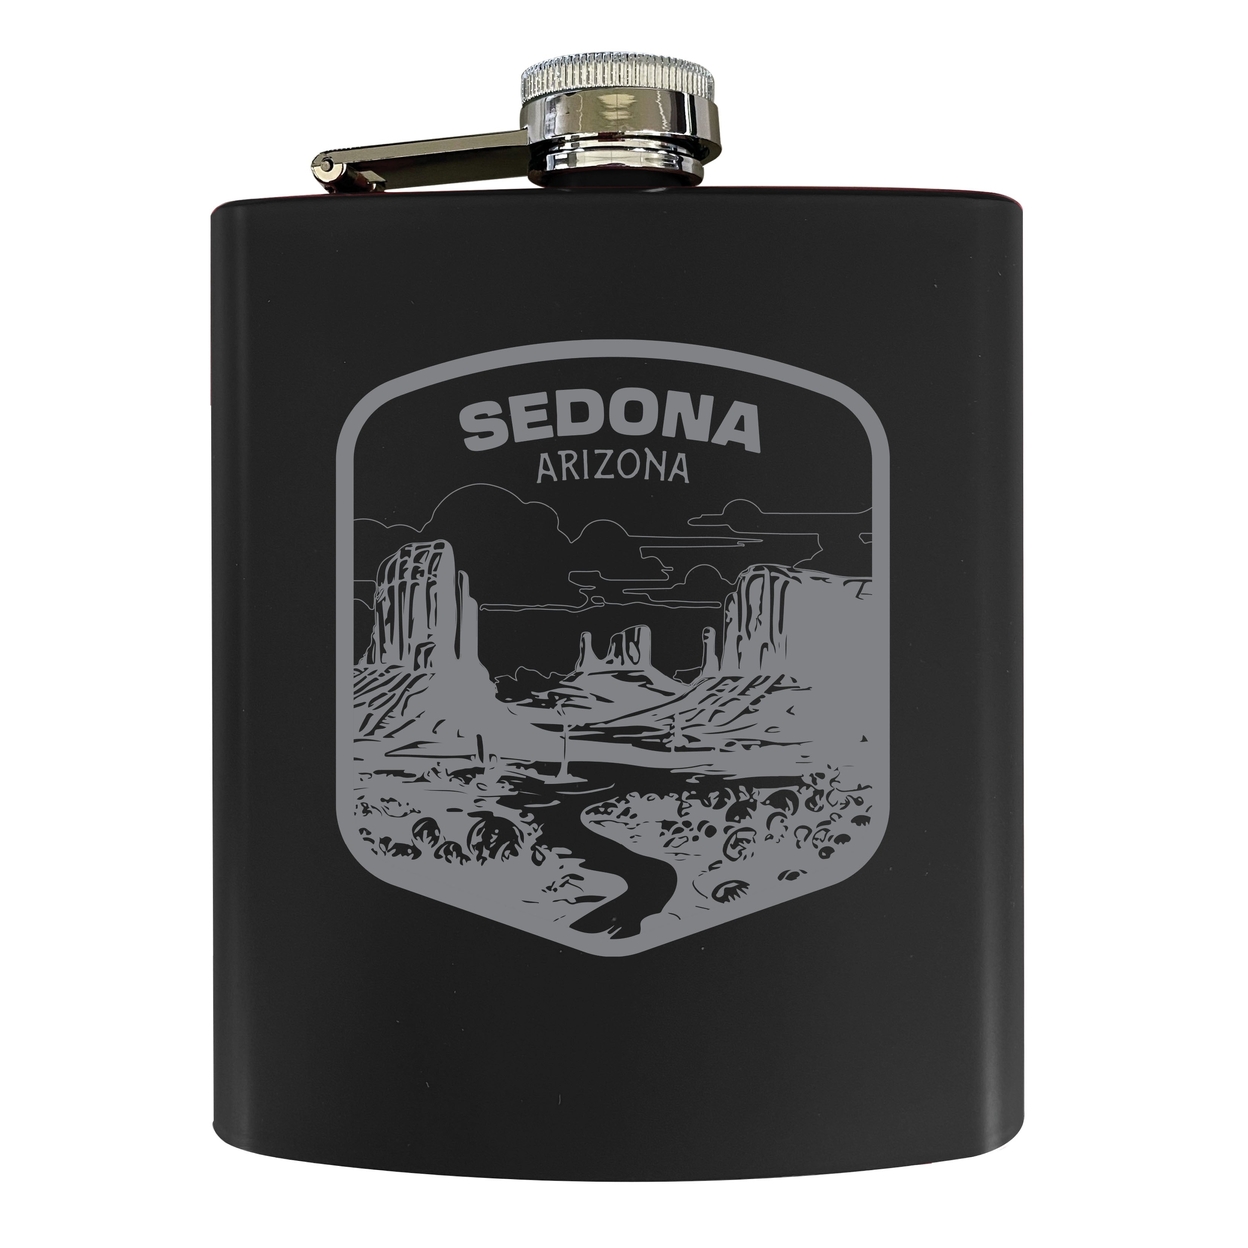 Sedona Arizona Souvenir 7 Oz Engraved Steel Flask Matte Finish - Black,,4-Pack